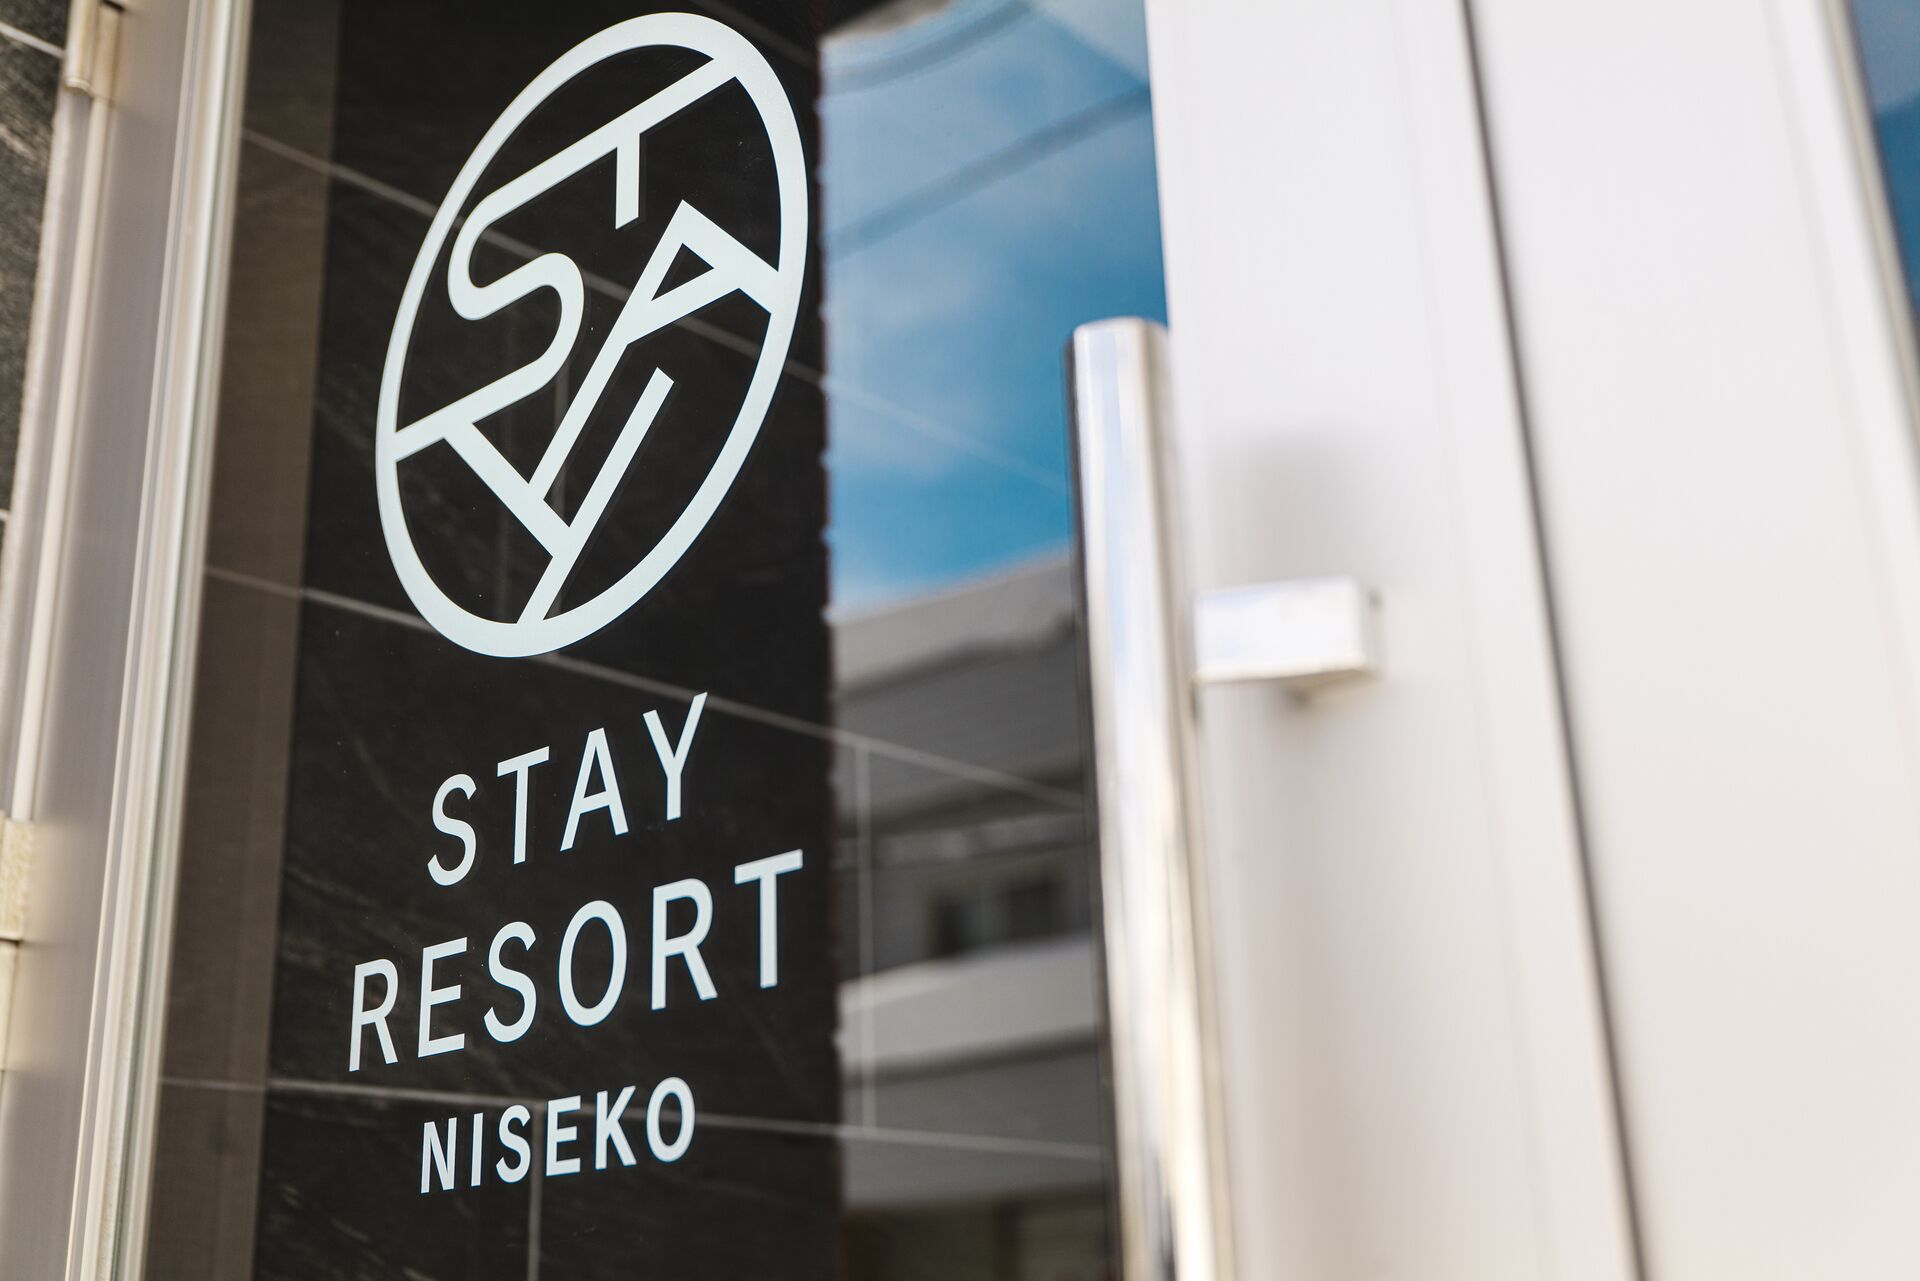 Stay Resort Niseko